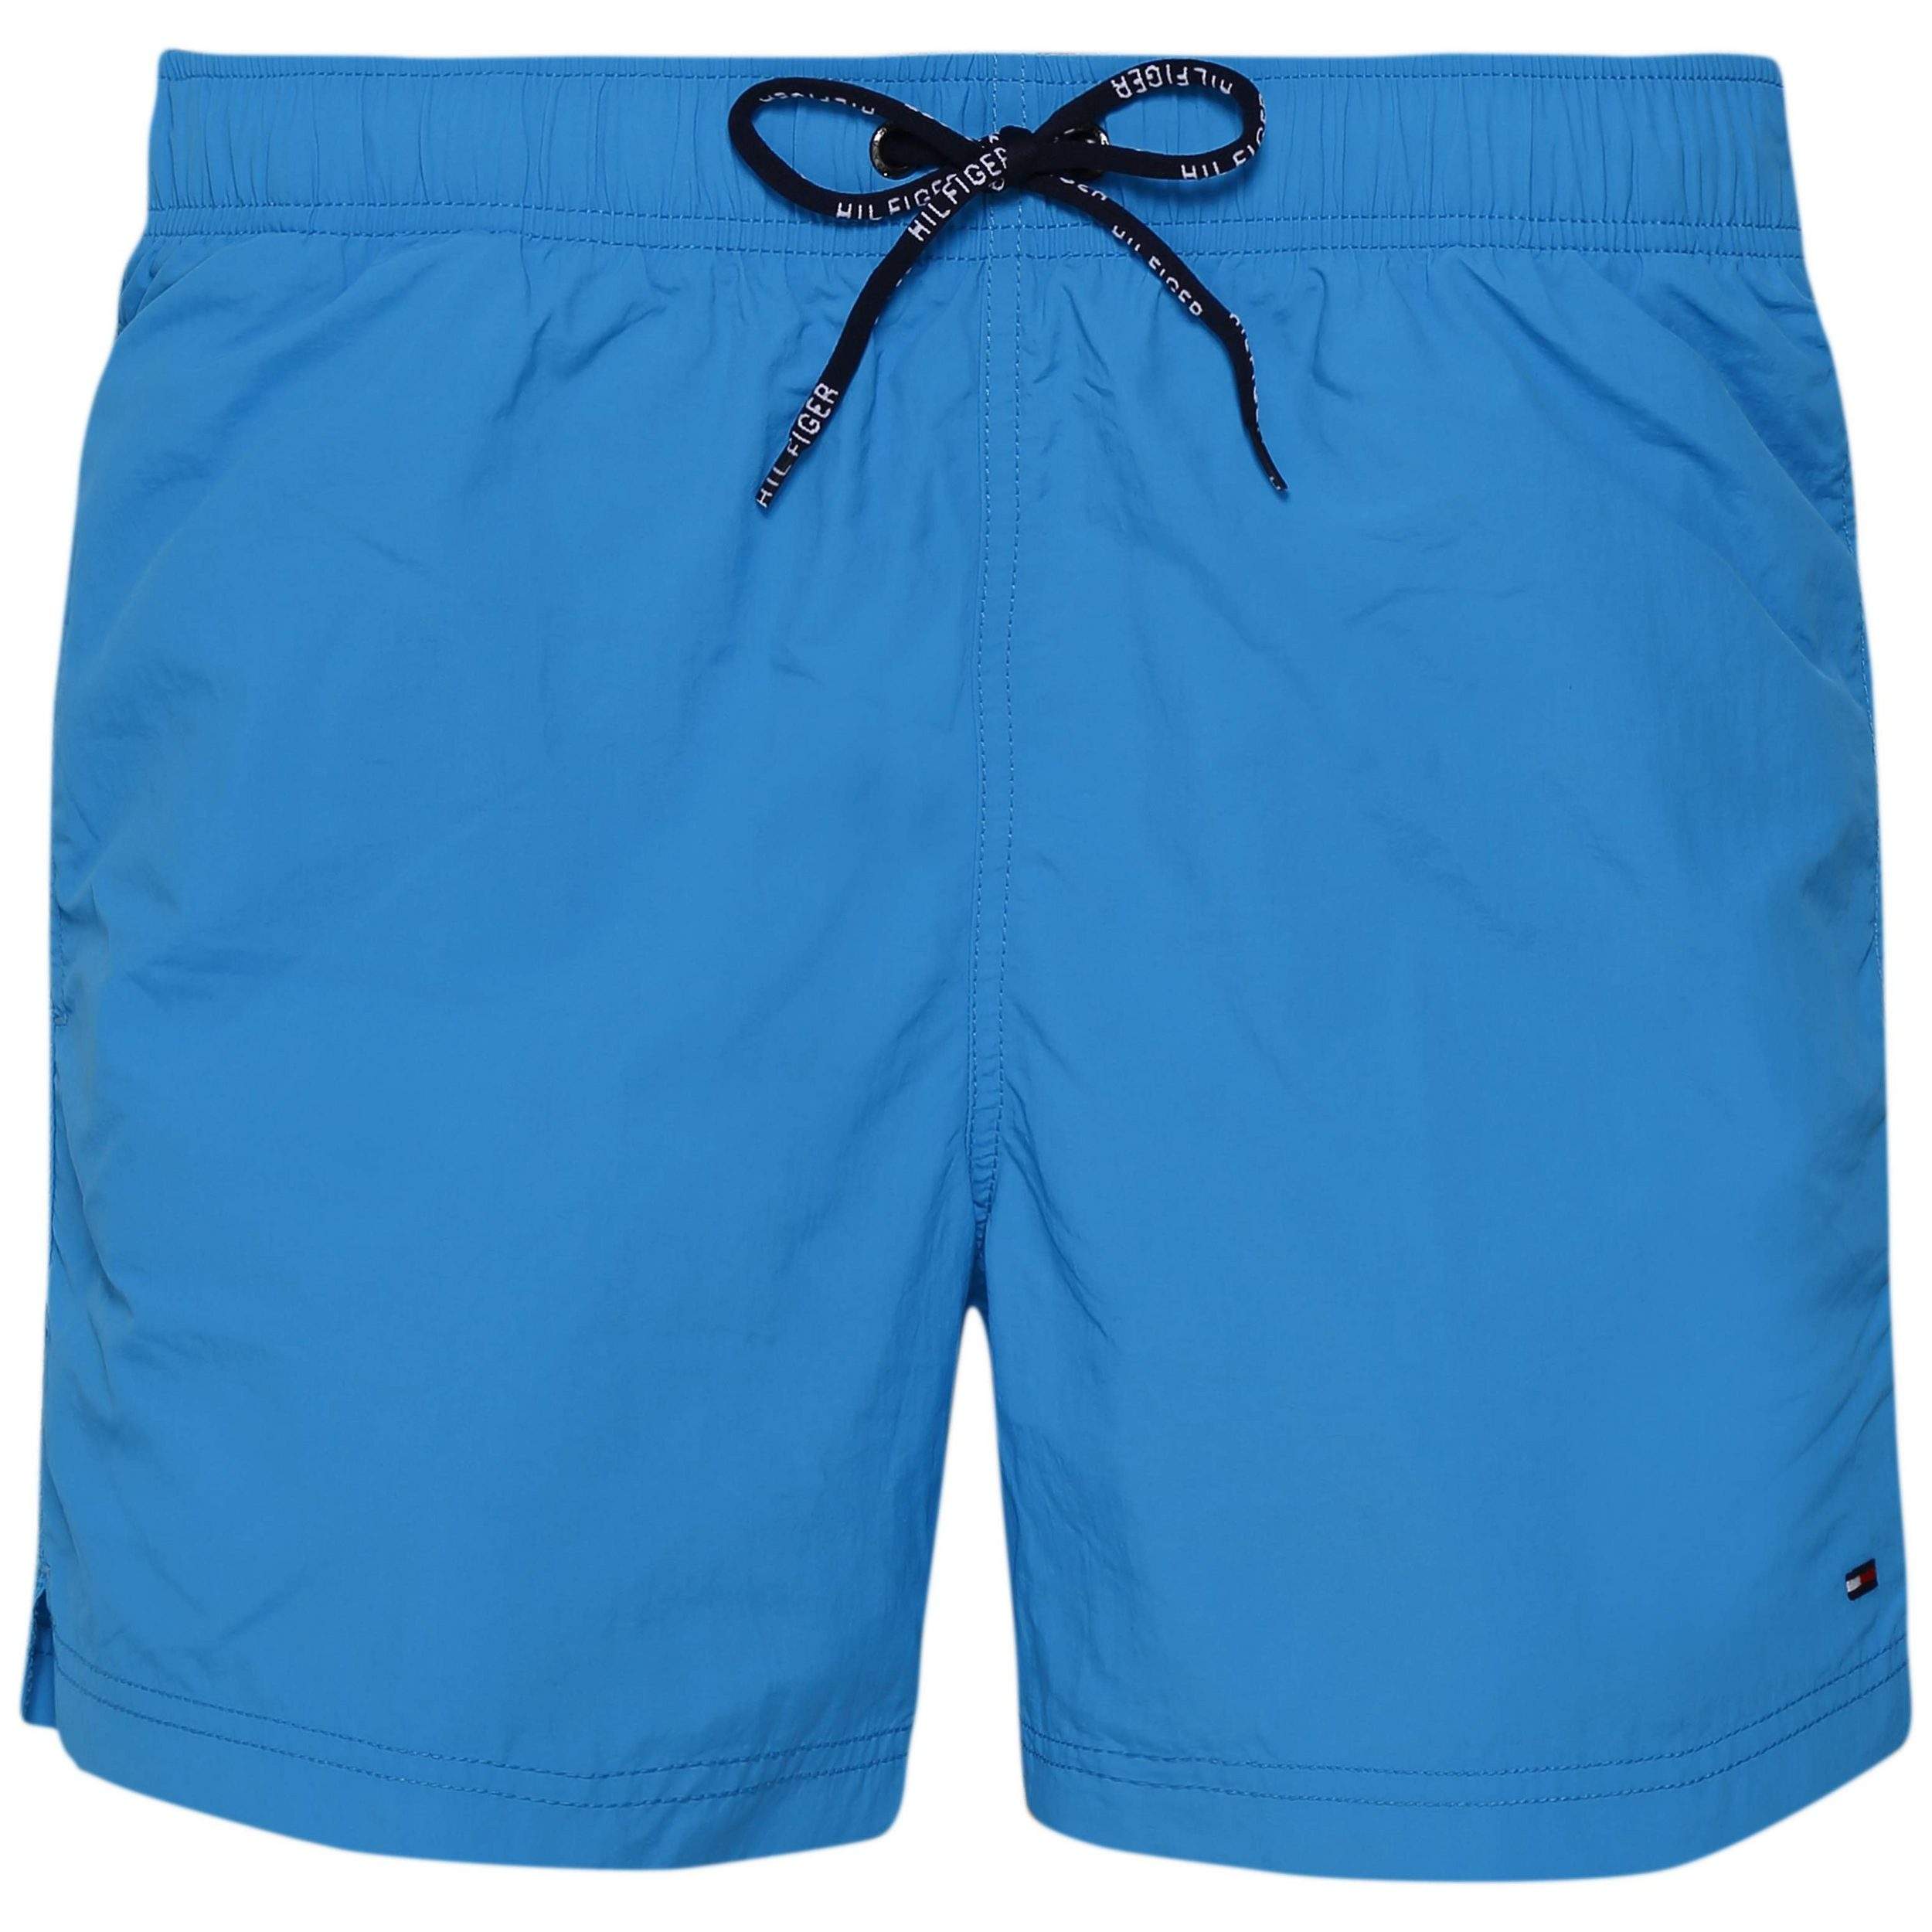 Tommy Hilfiger Mens Vivid Blue Solid Swim Trunks Shorts | eBay